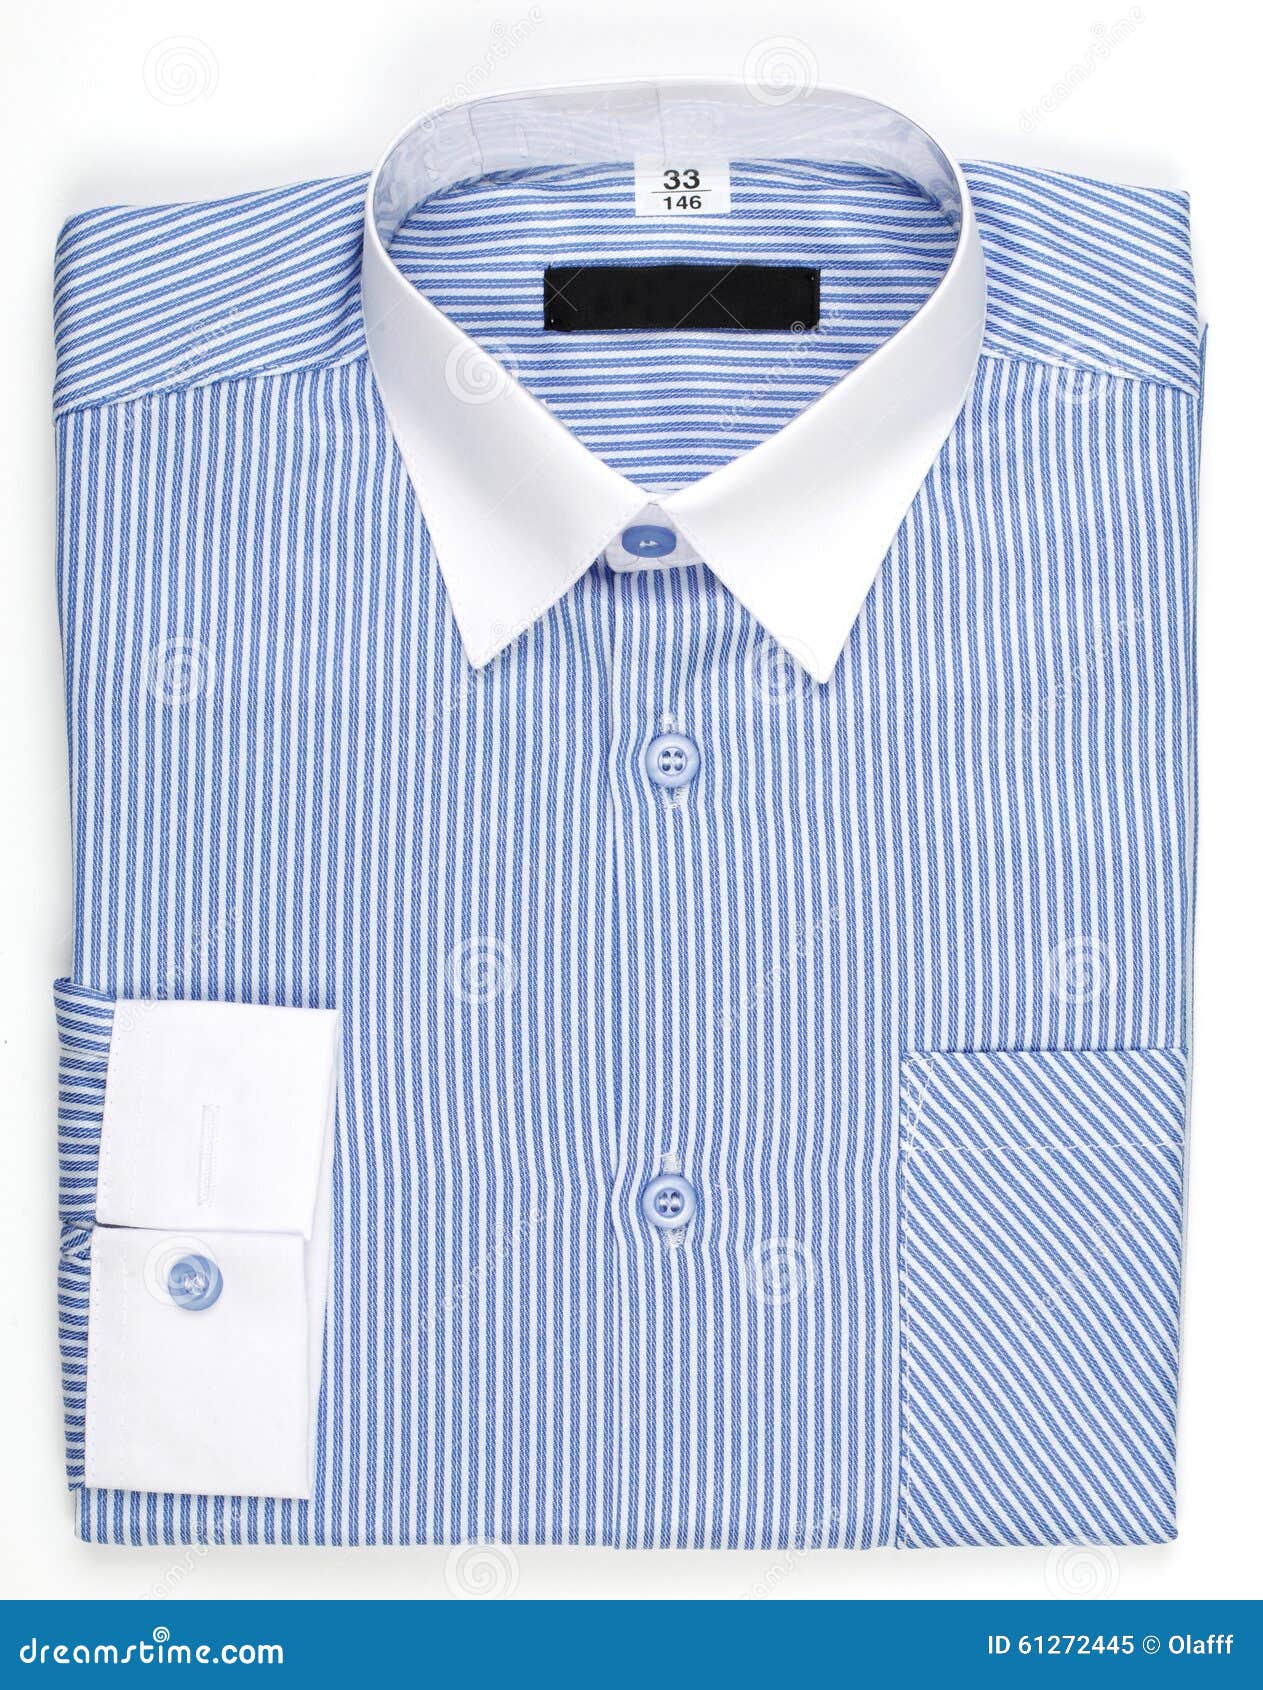 Men s shirt , blue stock image. Image of fabric, shirt - 61272445